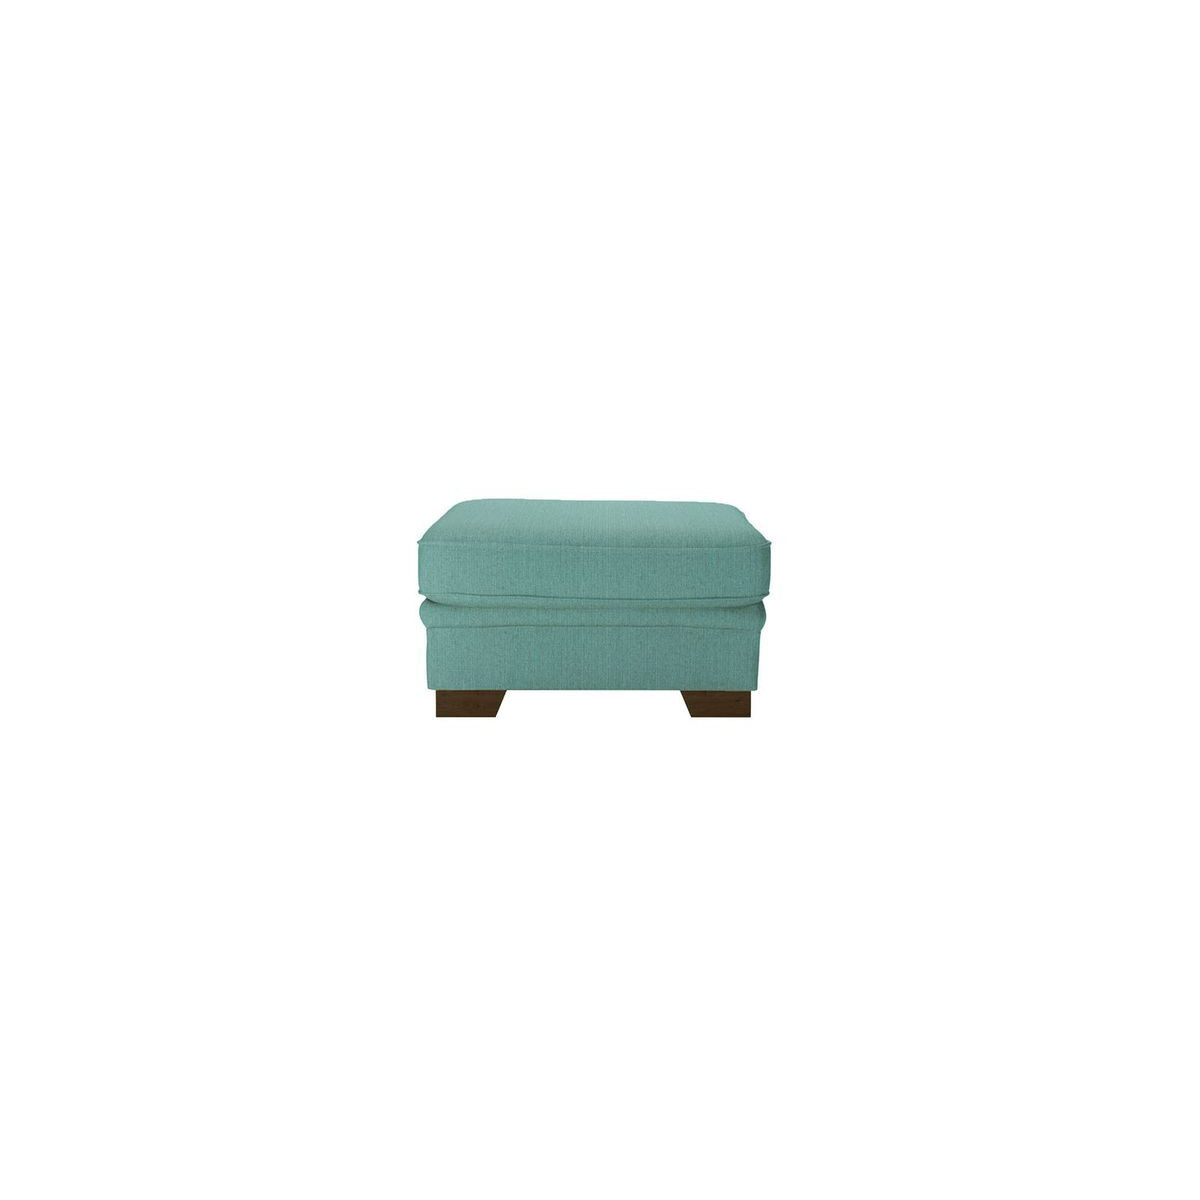 Ronay Footstool, turquoise, Leg colour: dark oak - image 1